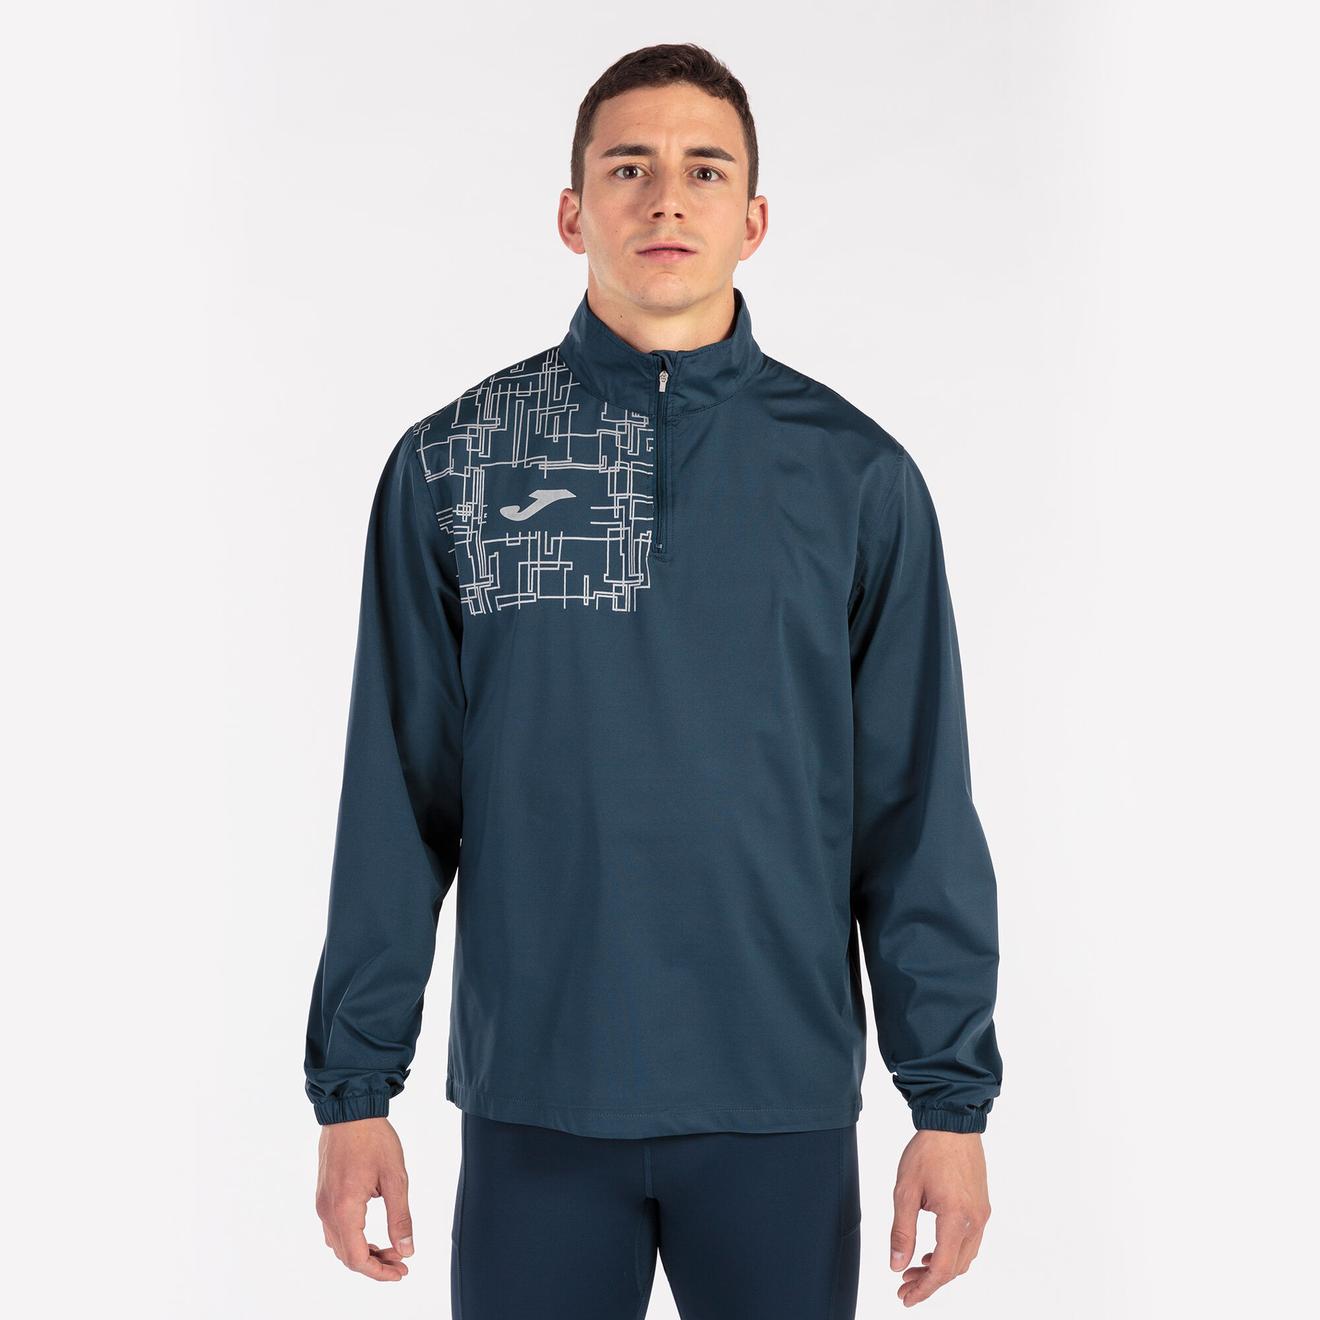 Sweatshirt man Elite VIII navy blue offers at £31.5 in Joma